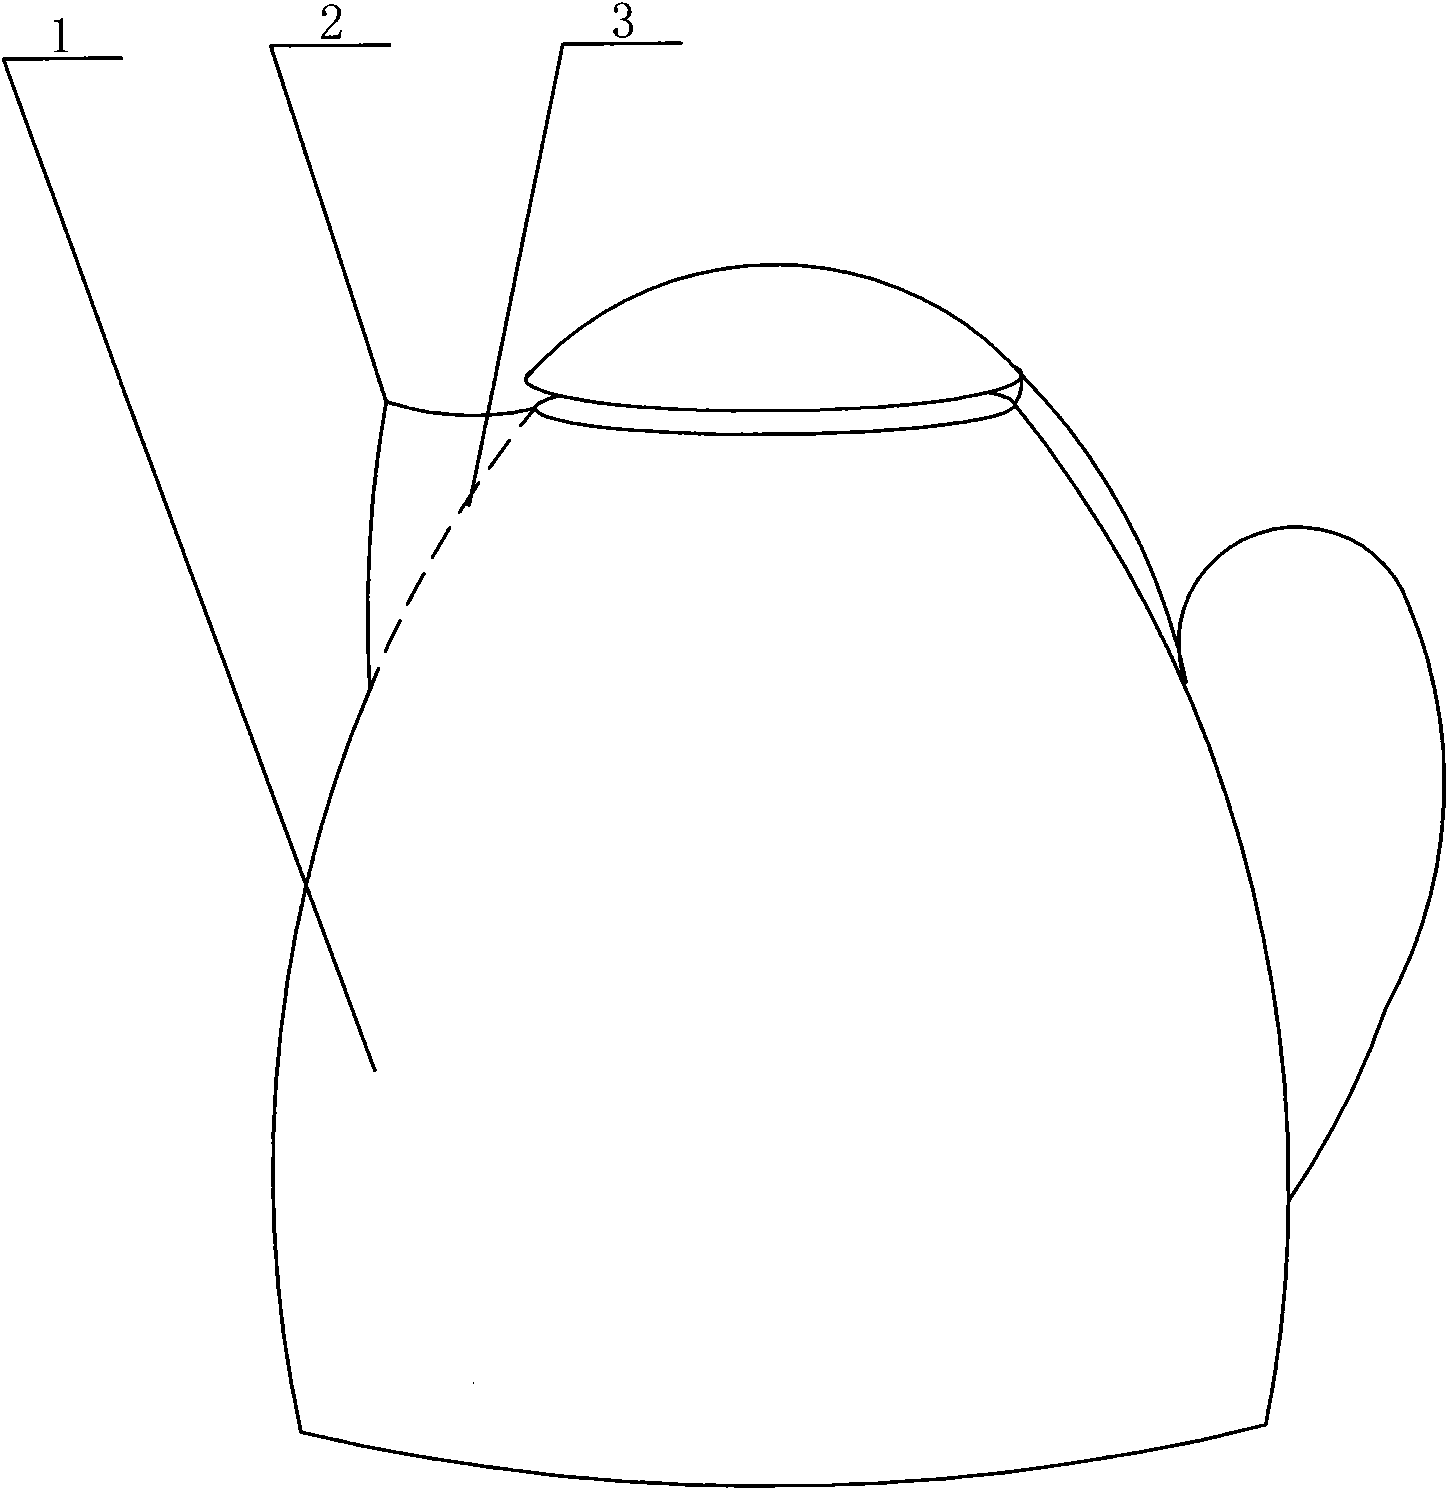 Novel electric kettle